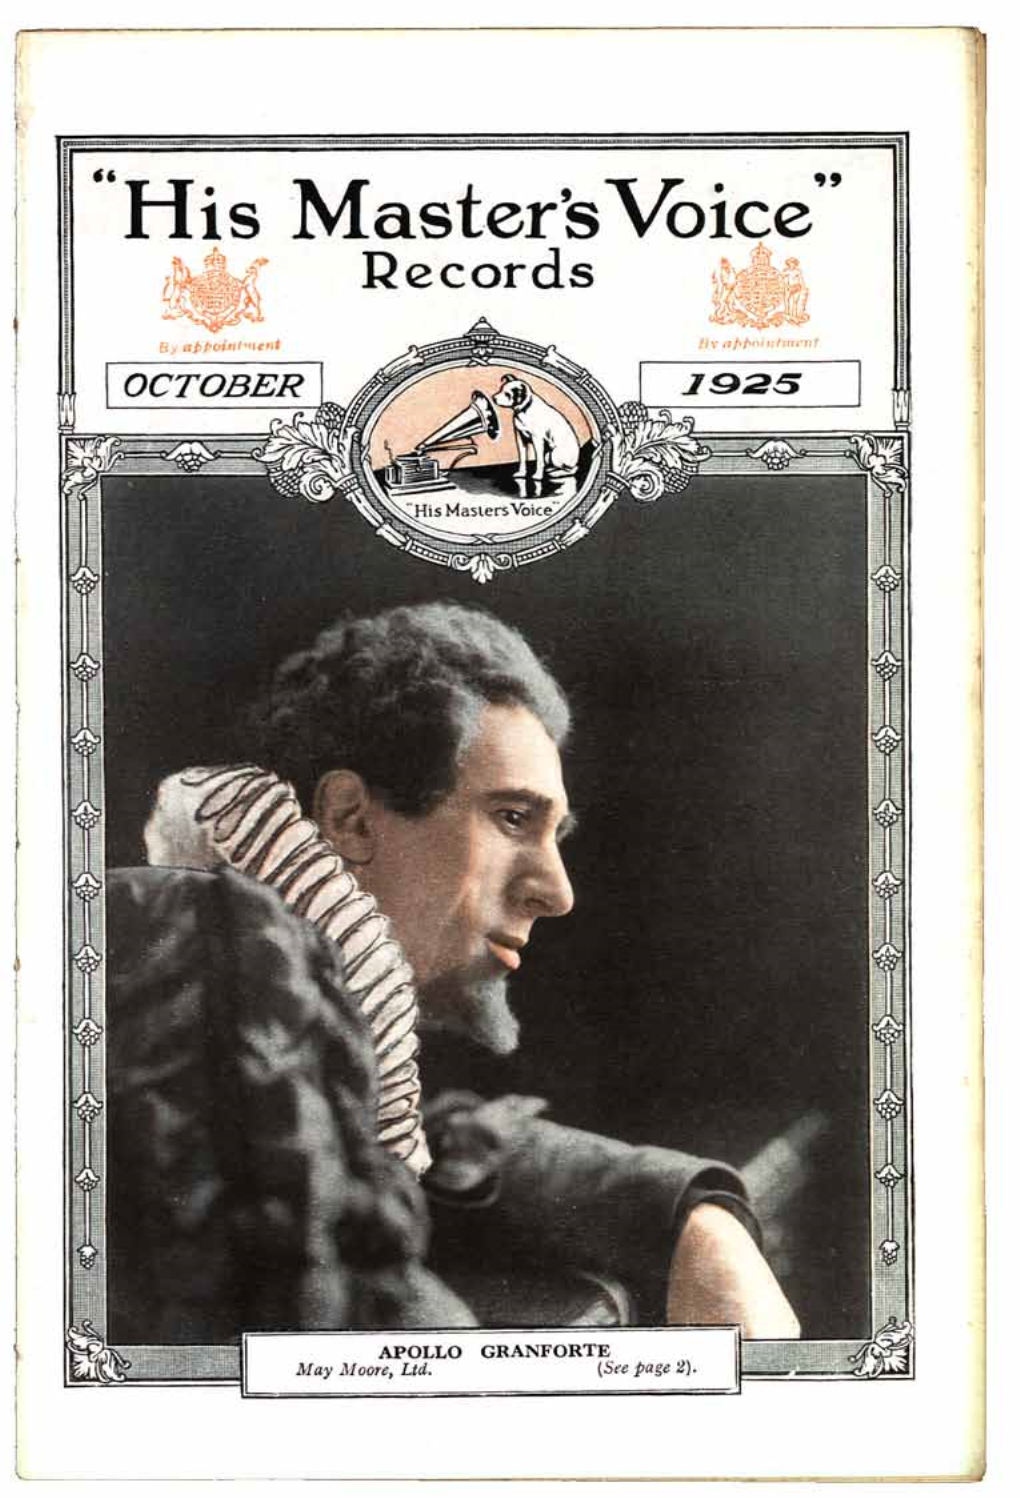 His Mastefsvoice"Records